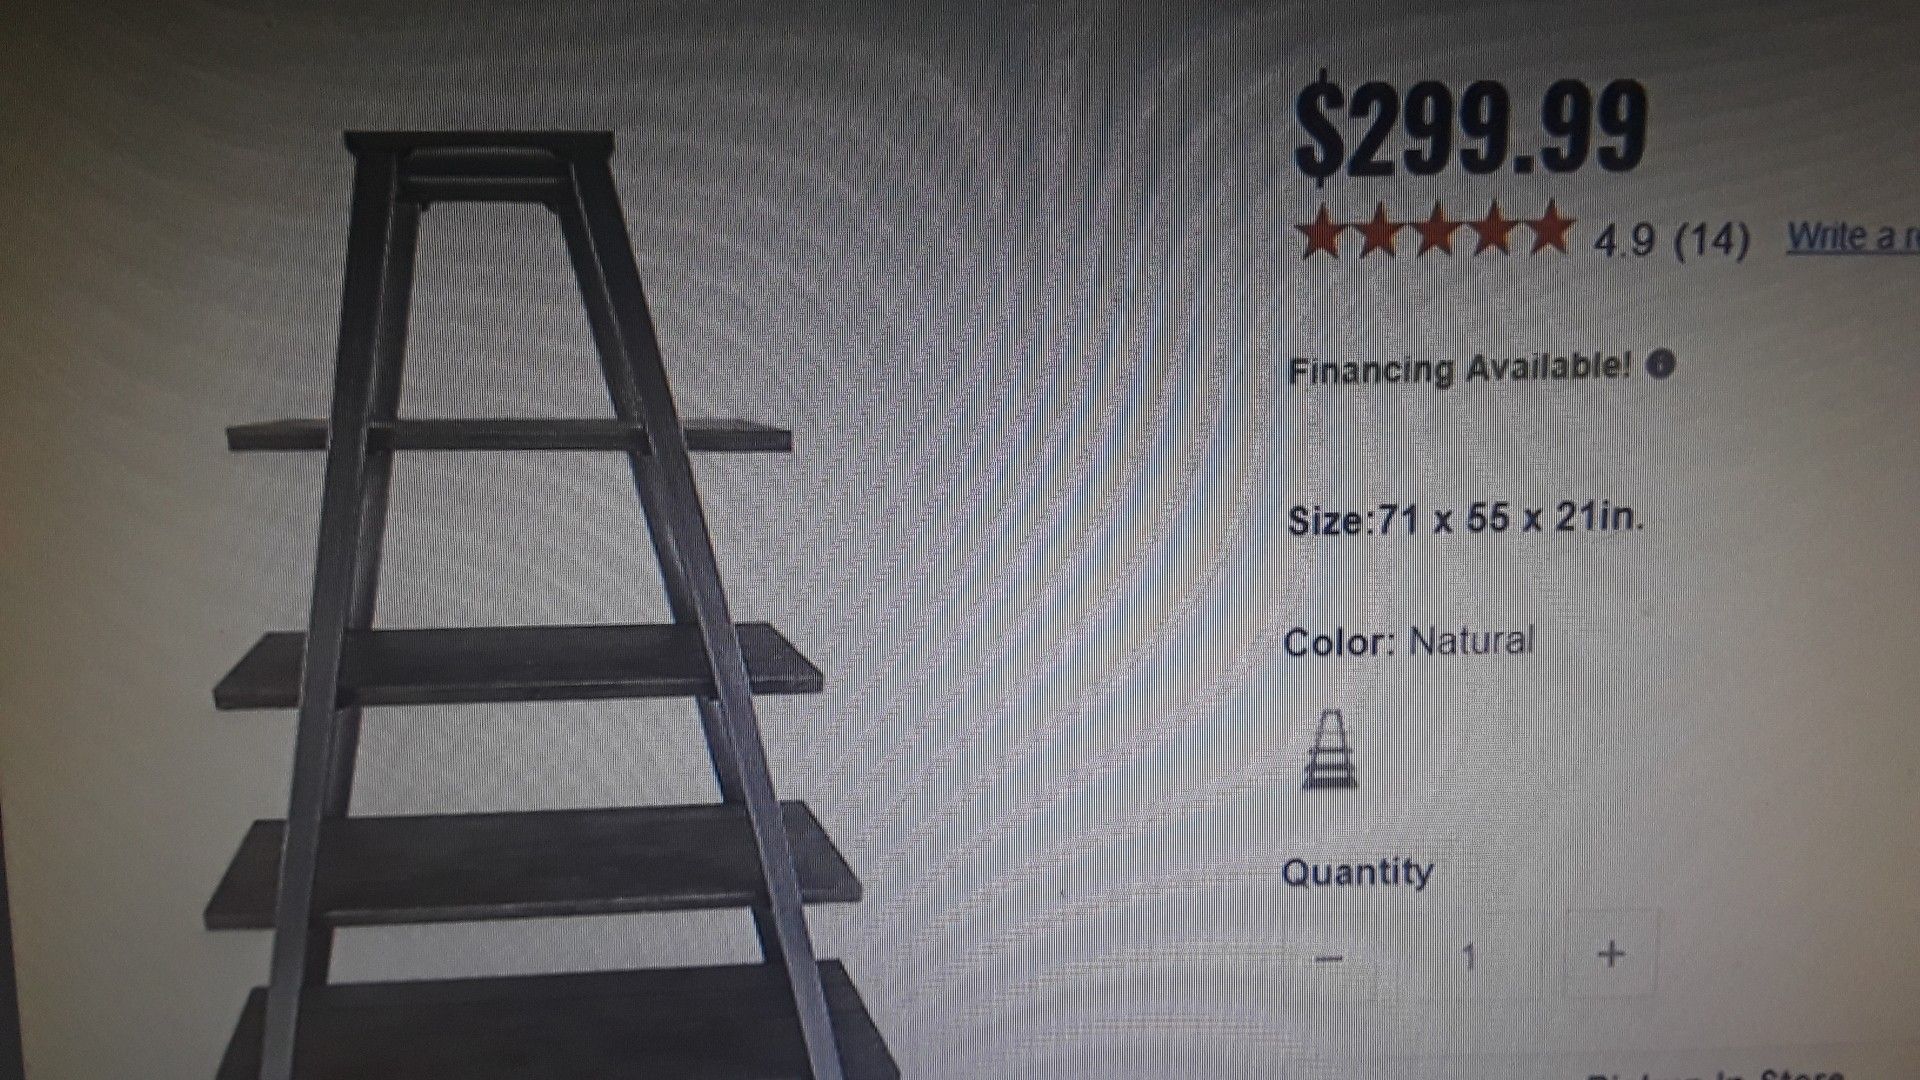 Galvanized ladder shelf